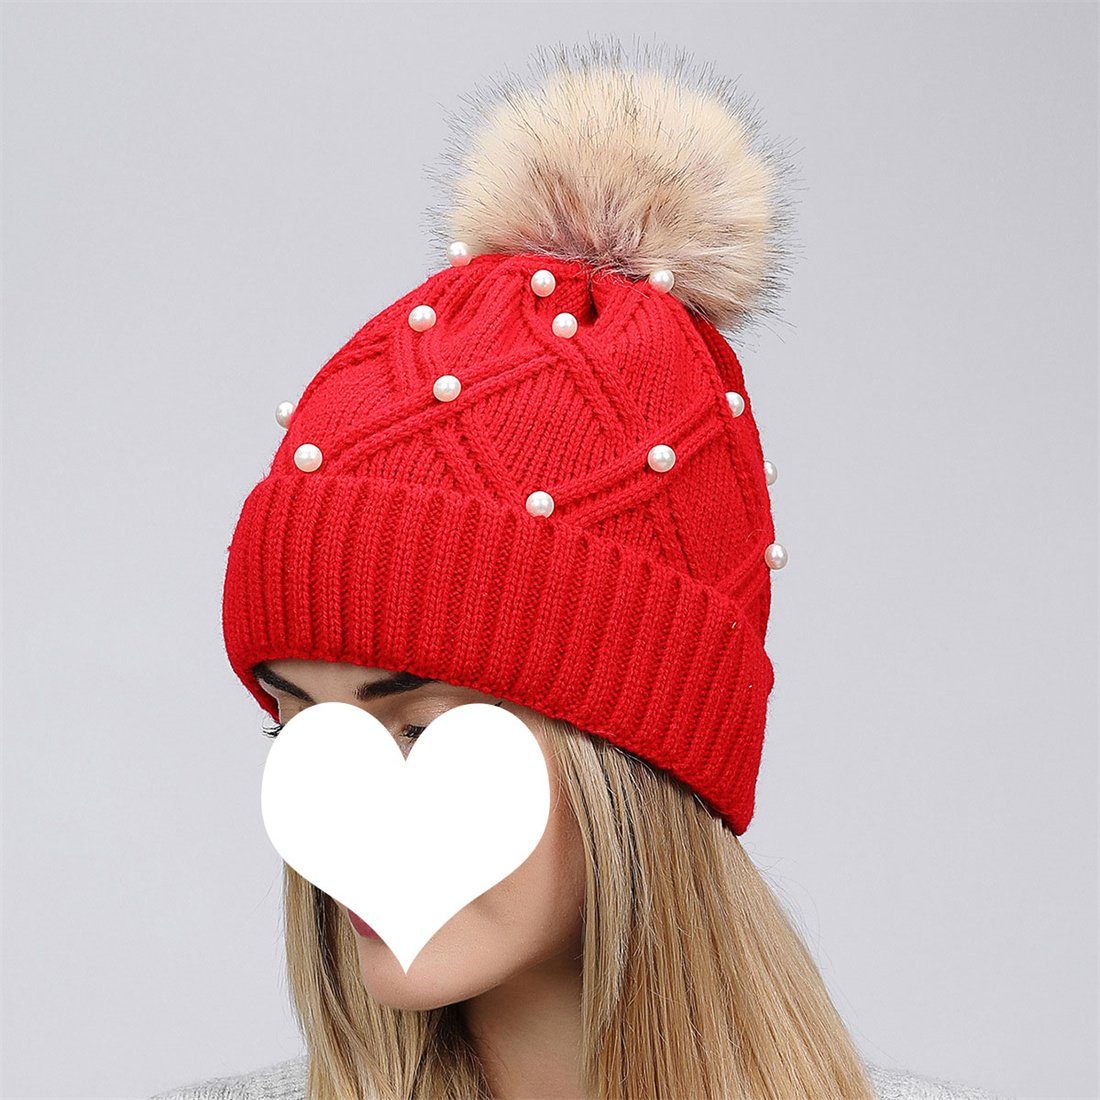 DÖRÖY Strickmütze Cap Hairball Women's Winter Warm Woolen Cap, Thickened Knitted Rot Fashion